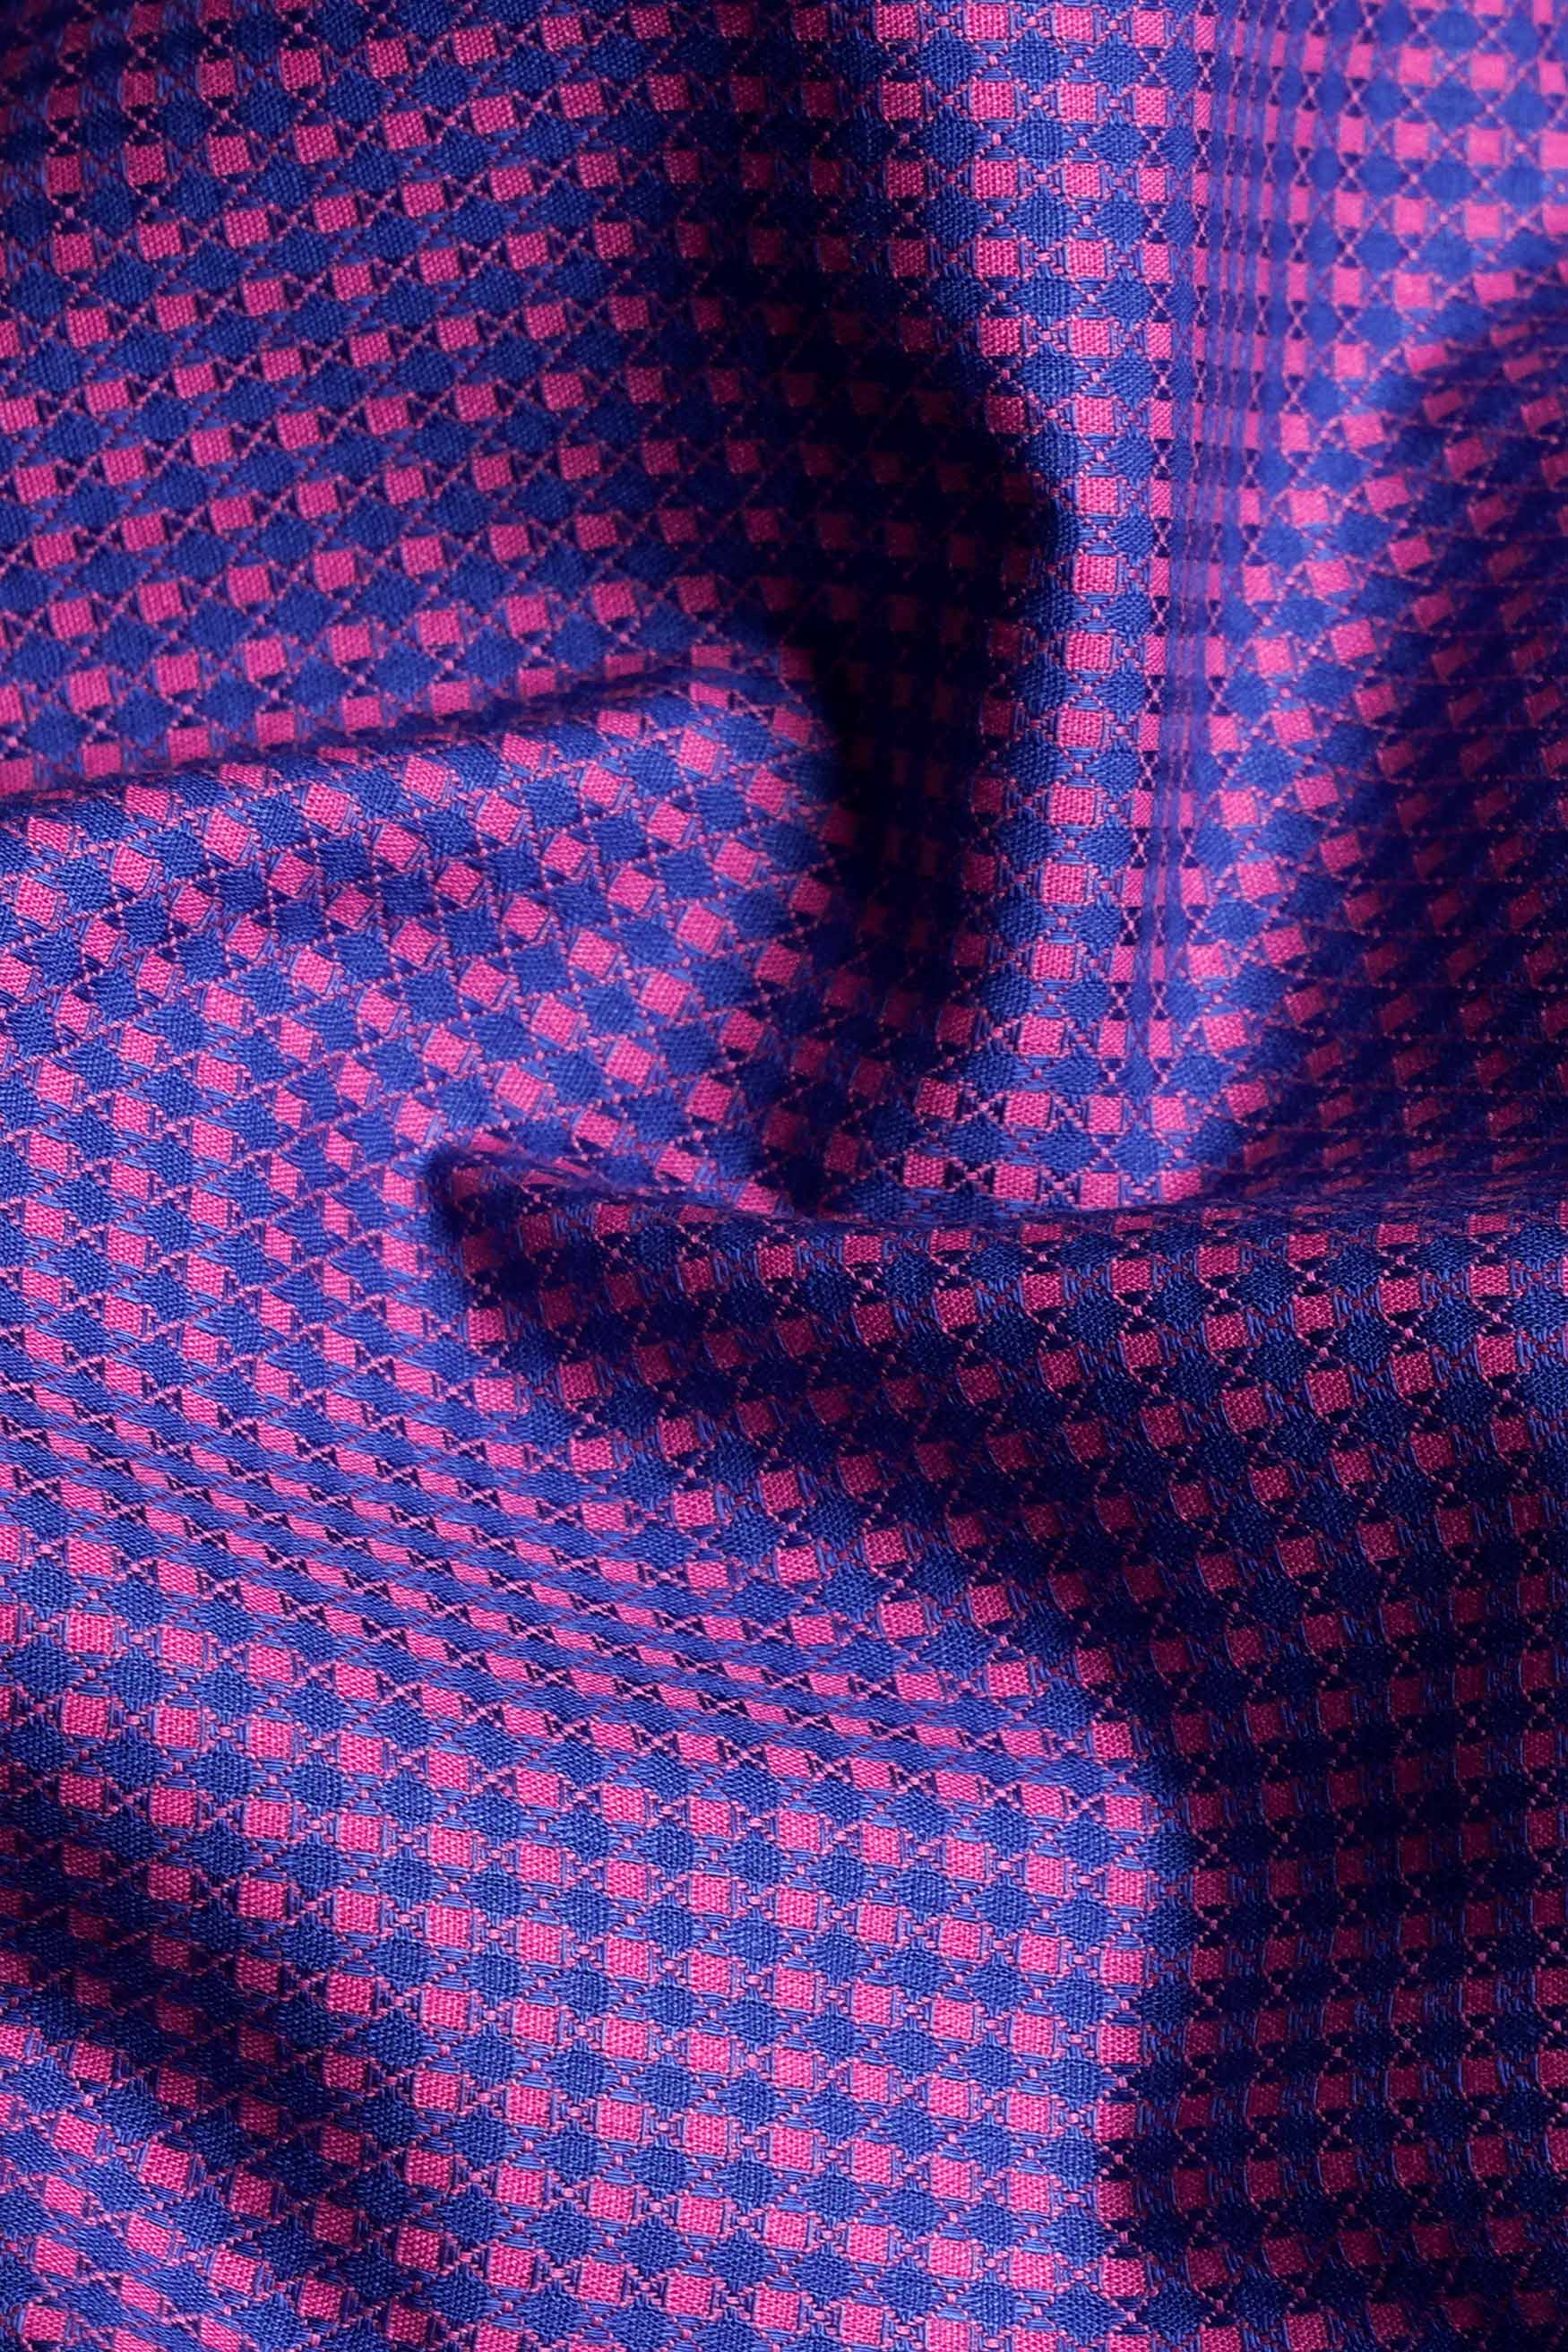 Catalina Blue and Cerise Pink Gingham Checkered Jacquard Textured Premium Giza Cotton Shirt